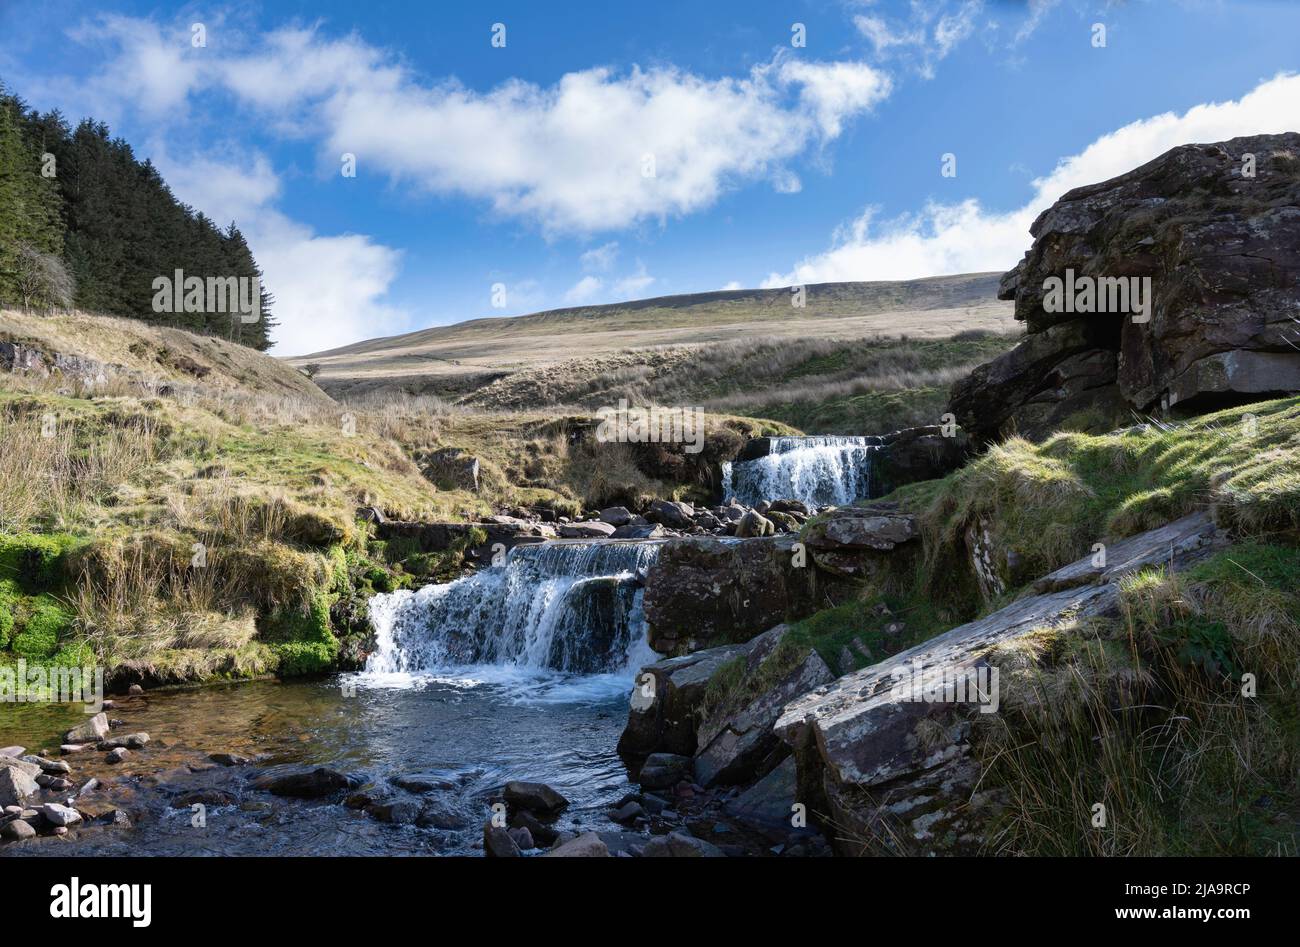 Waterfalls at the base of Pen y Fan Mountain, Wales, UK. Stock Photo